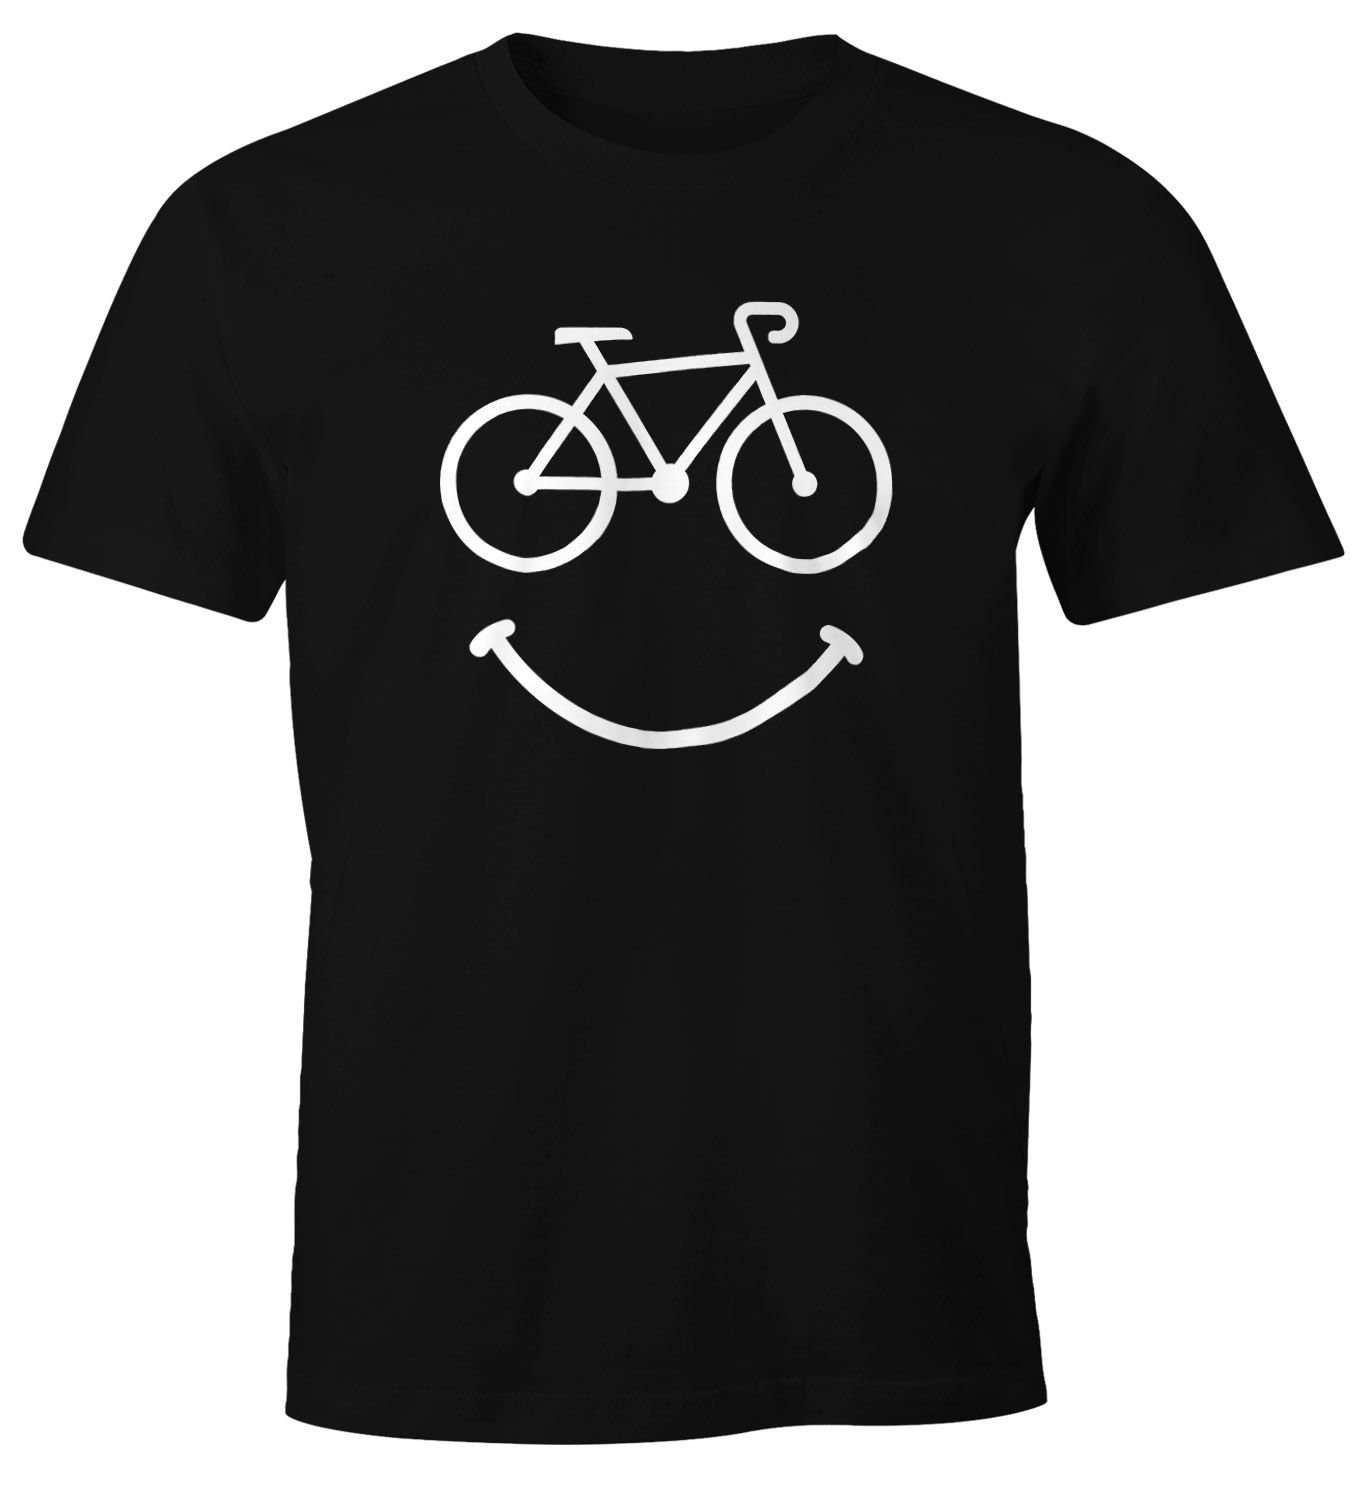 MoonWorks Print-Shirt Fahrrad Herren T-Shirt Smile Happy Bike Radfahren Fun-Shirt Moonworks® mit Print schwarz